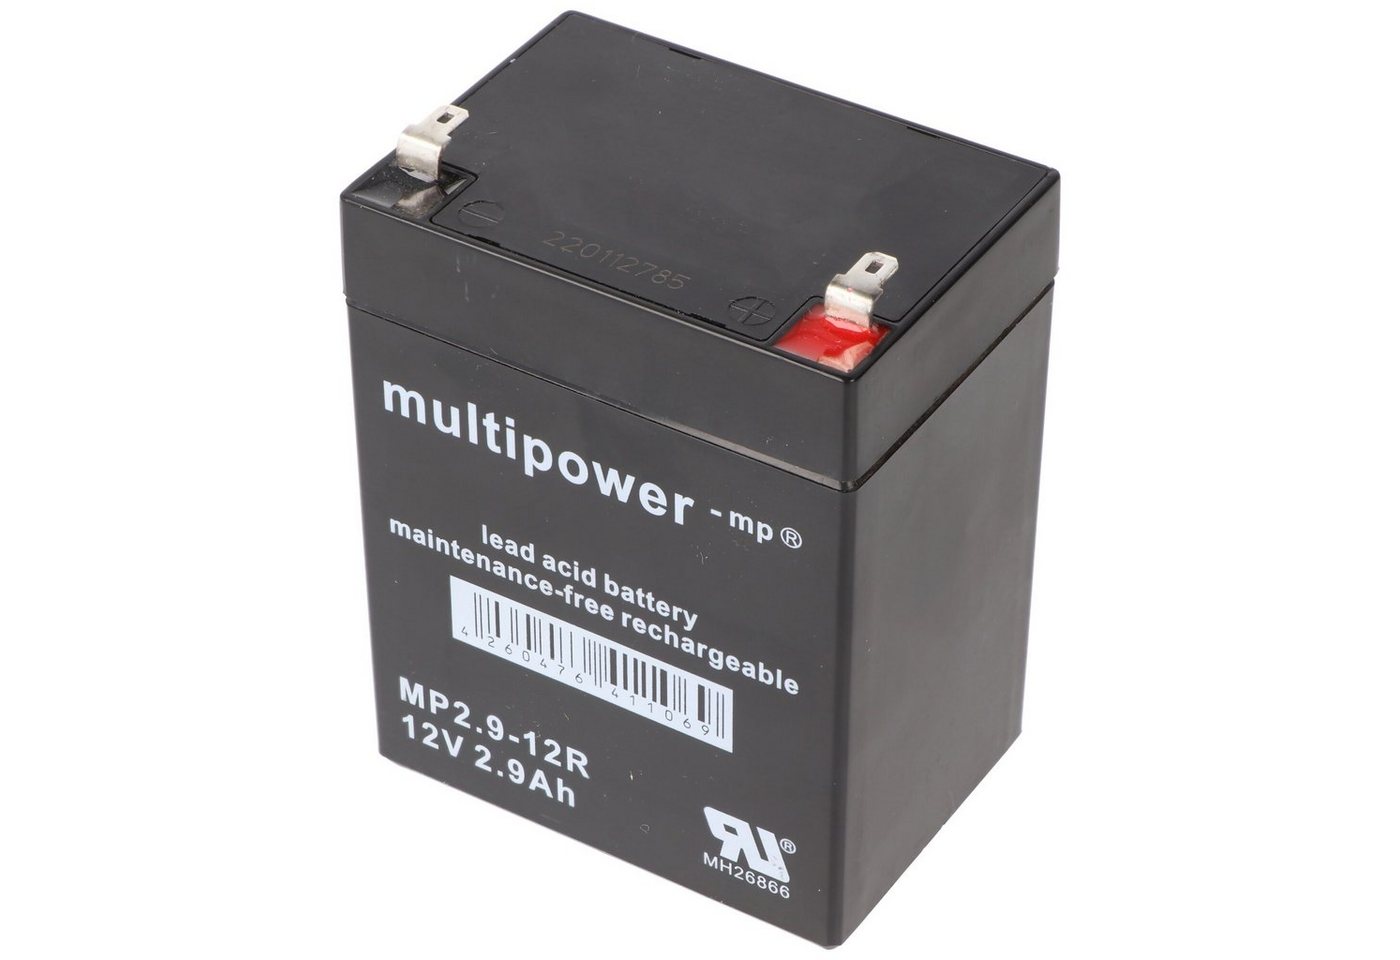 Multipower MultiPower MP2,9-12R Blei Akku mit Faston 4,8 mm 12V, 2900mAh Akku 2900 mAh (12,0 V) von Multipower